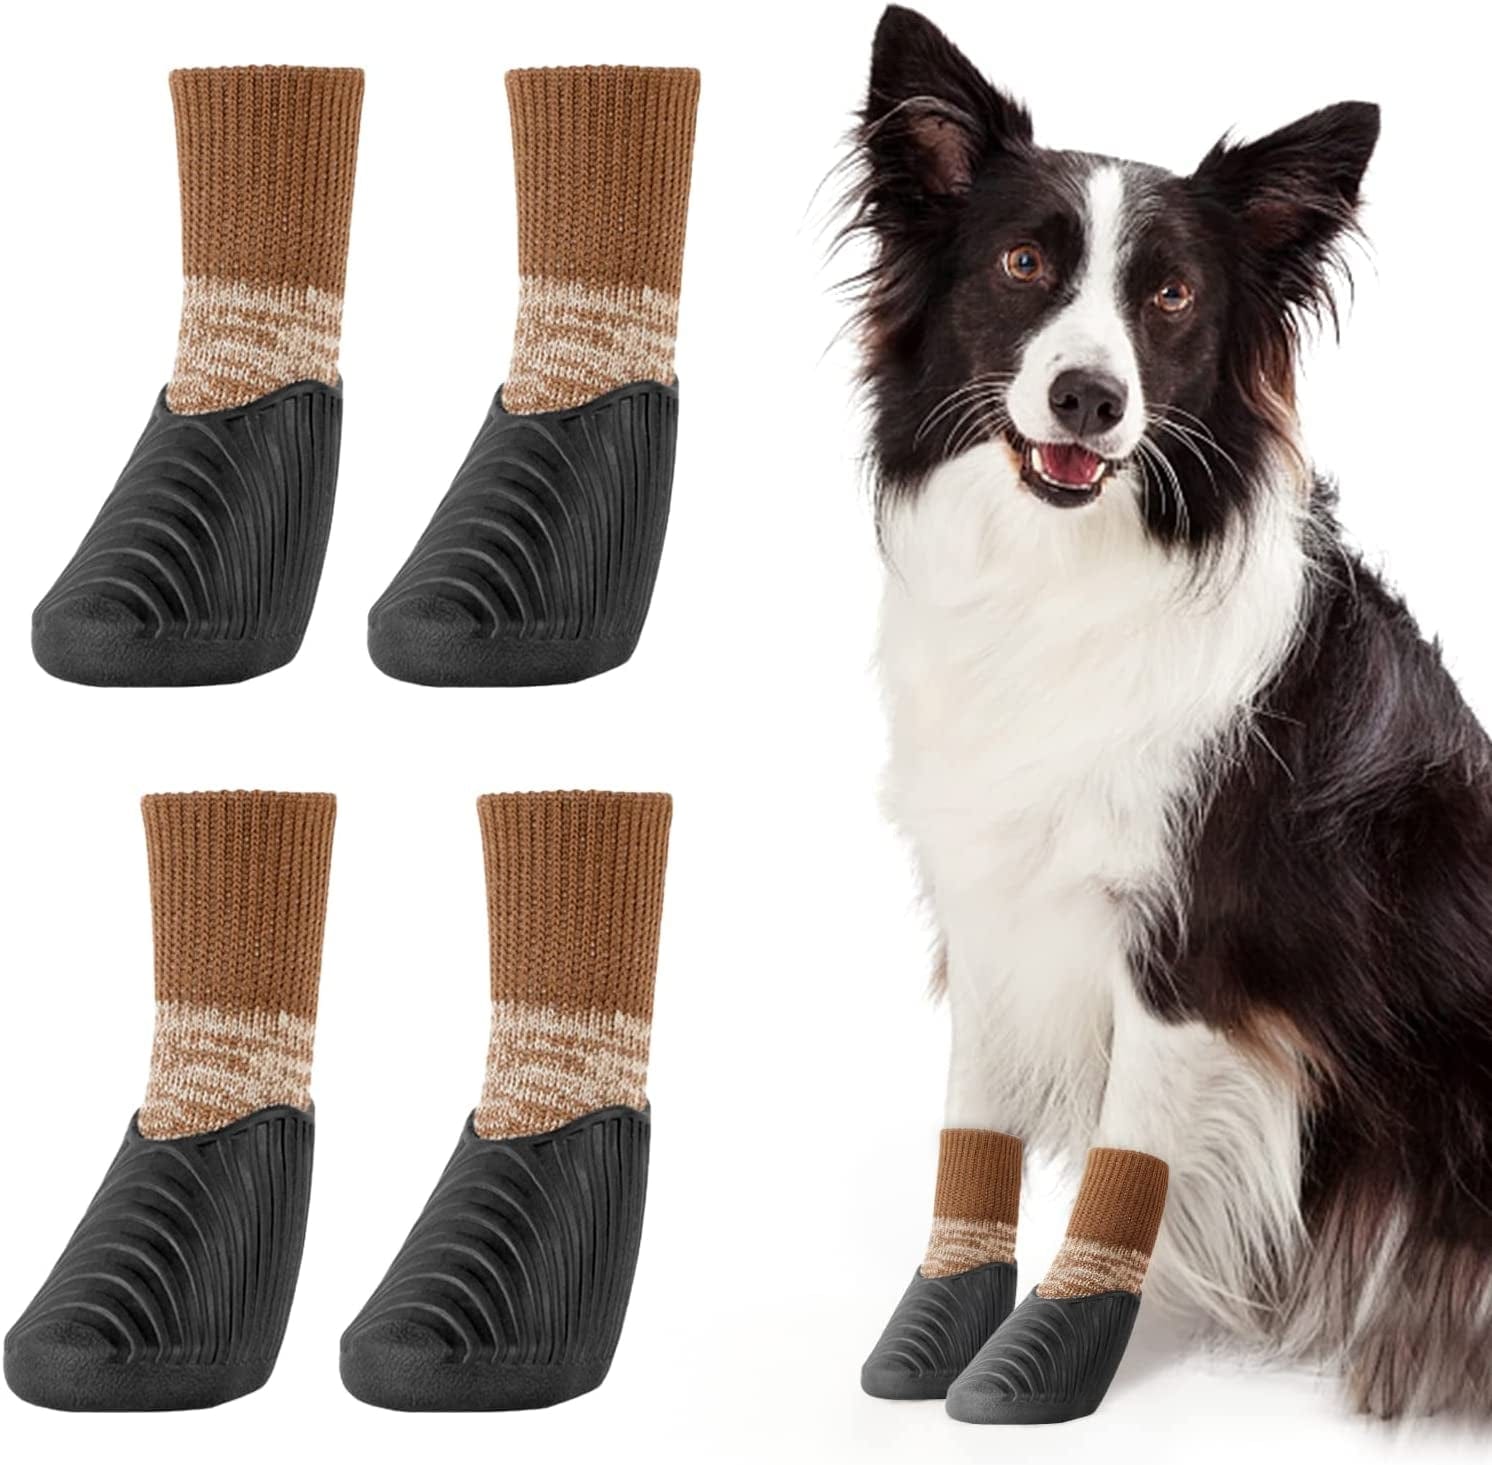  Dog Socks for Hot Pavement & Hardwood Floors, Anti